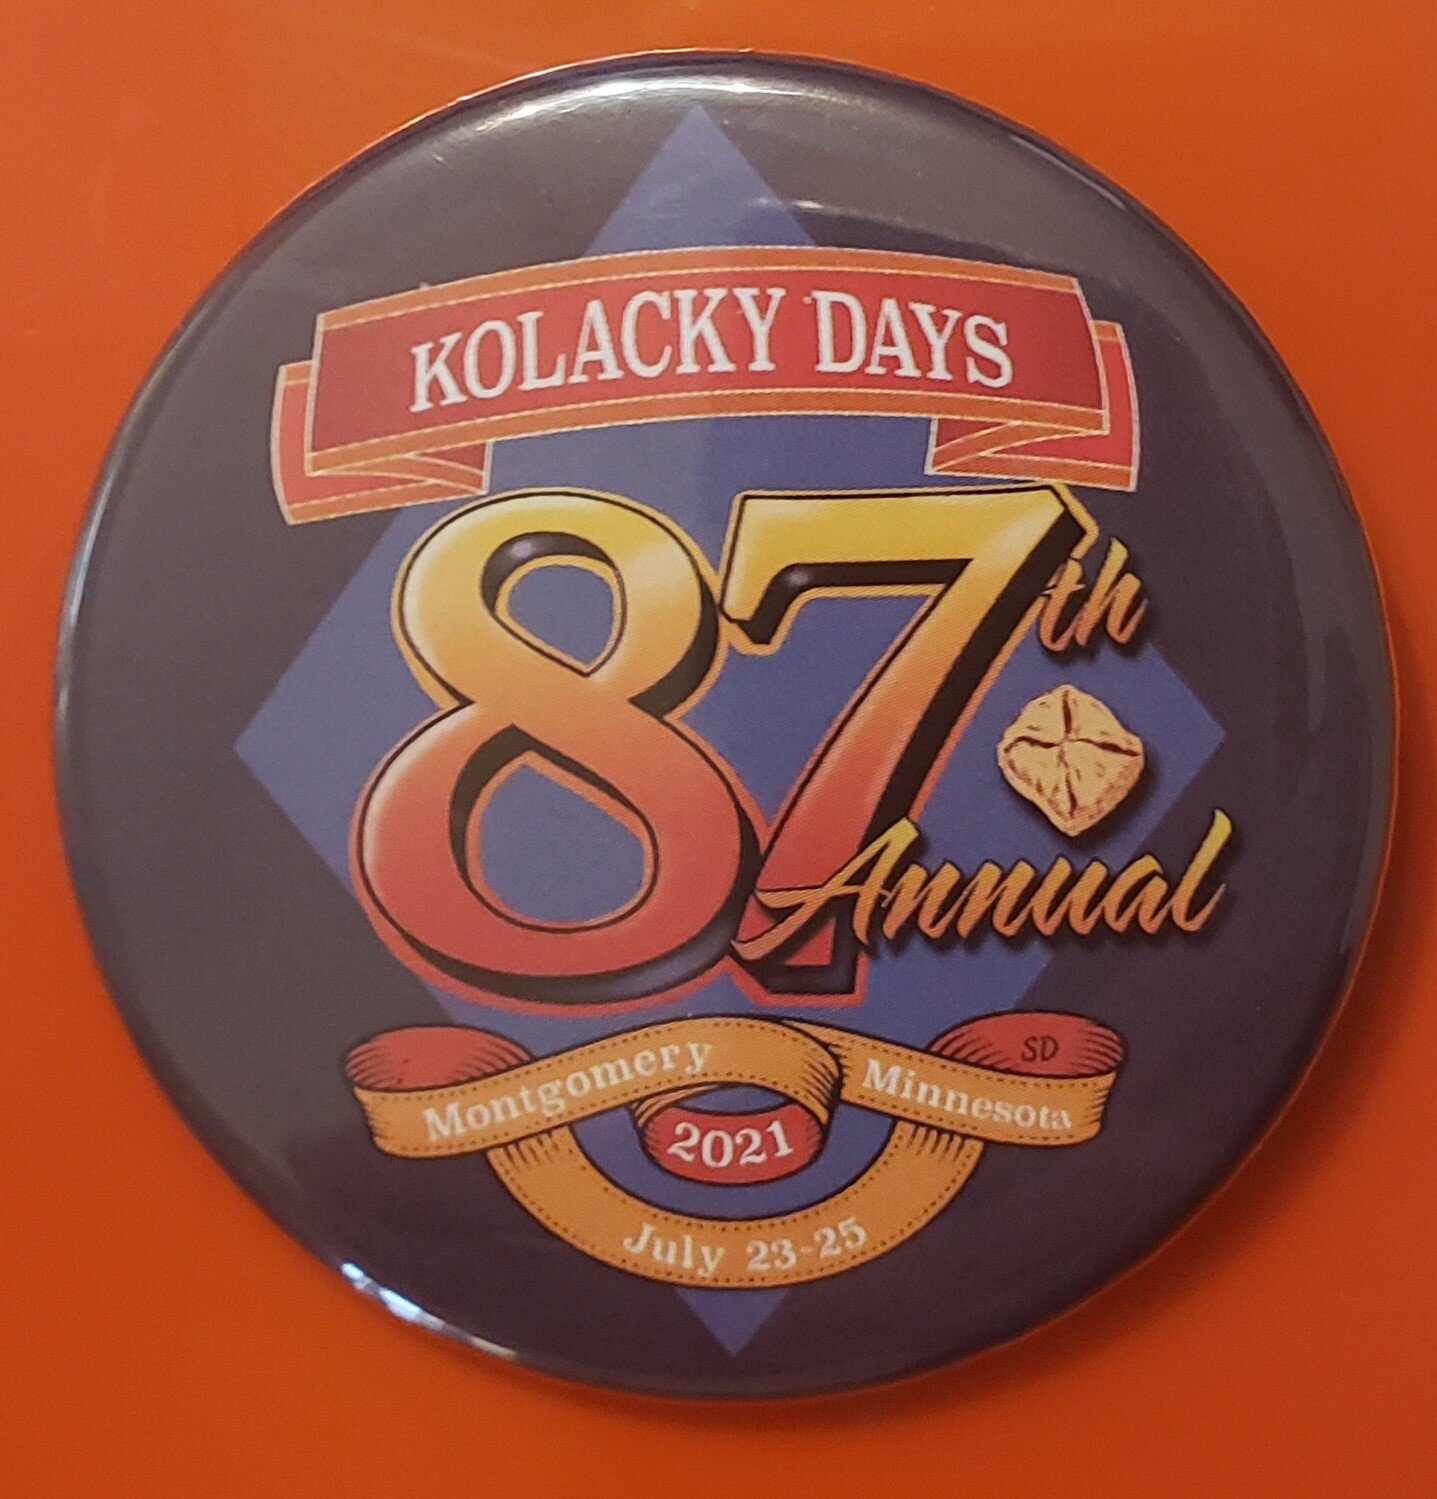 2021 Kolacky Days Button - Montgomery Minnesota.jpg